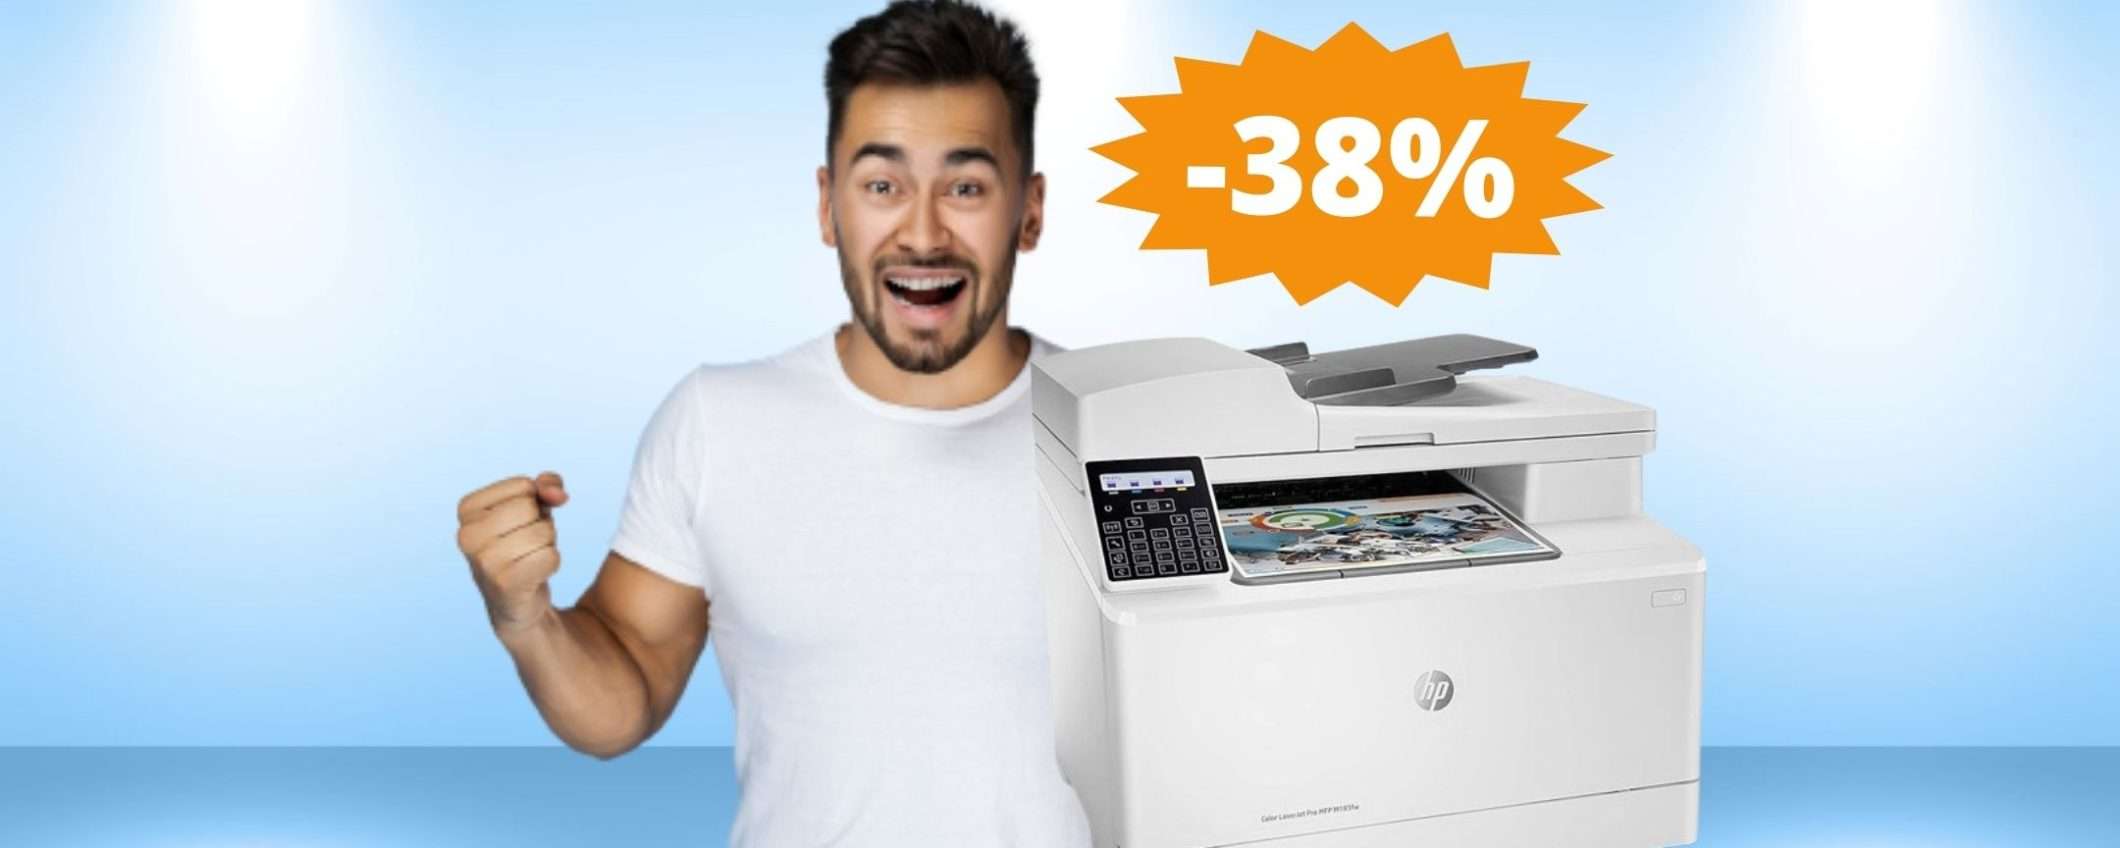 Stampante HP Color LaserJet Pro: un AFFARE su Amazon (-38%)